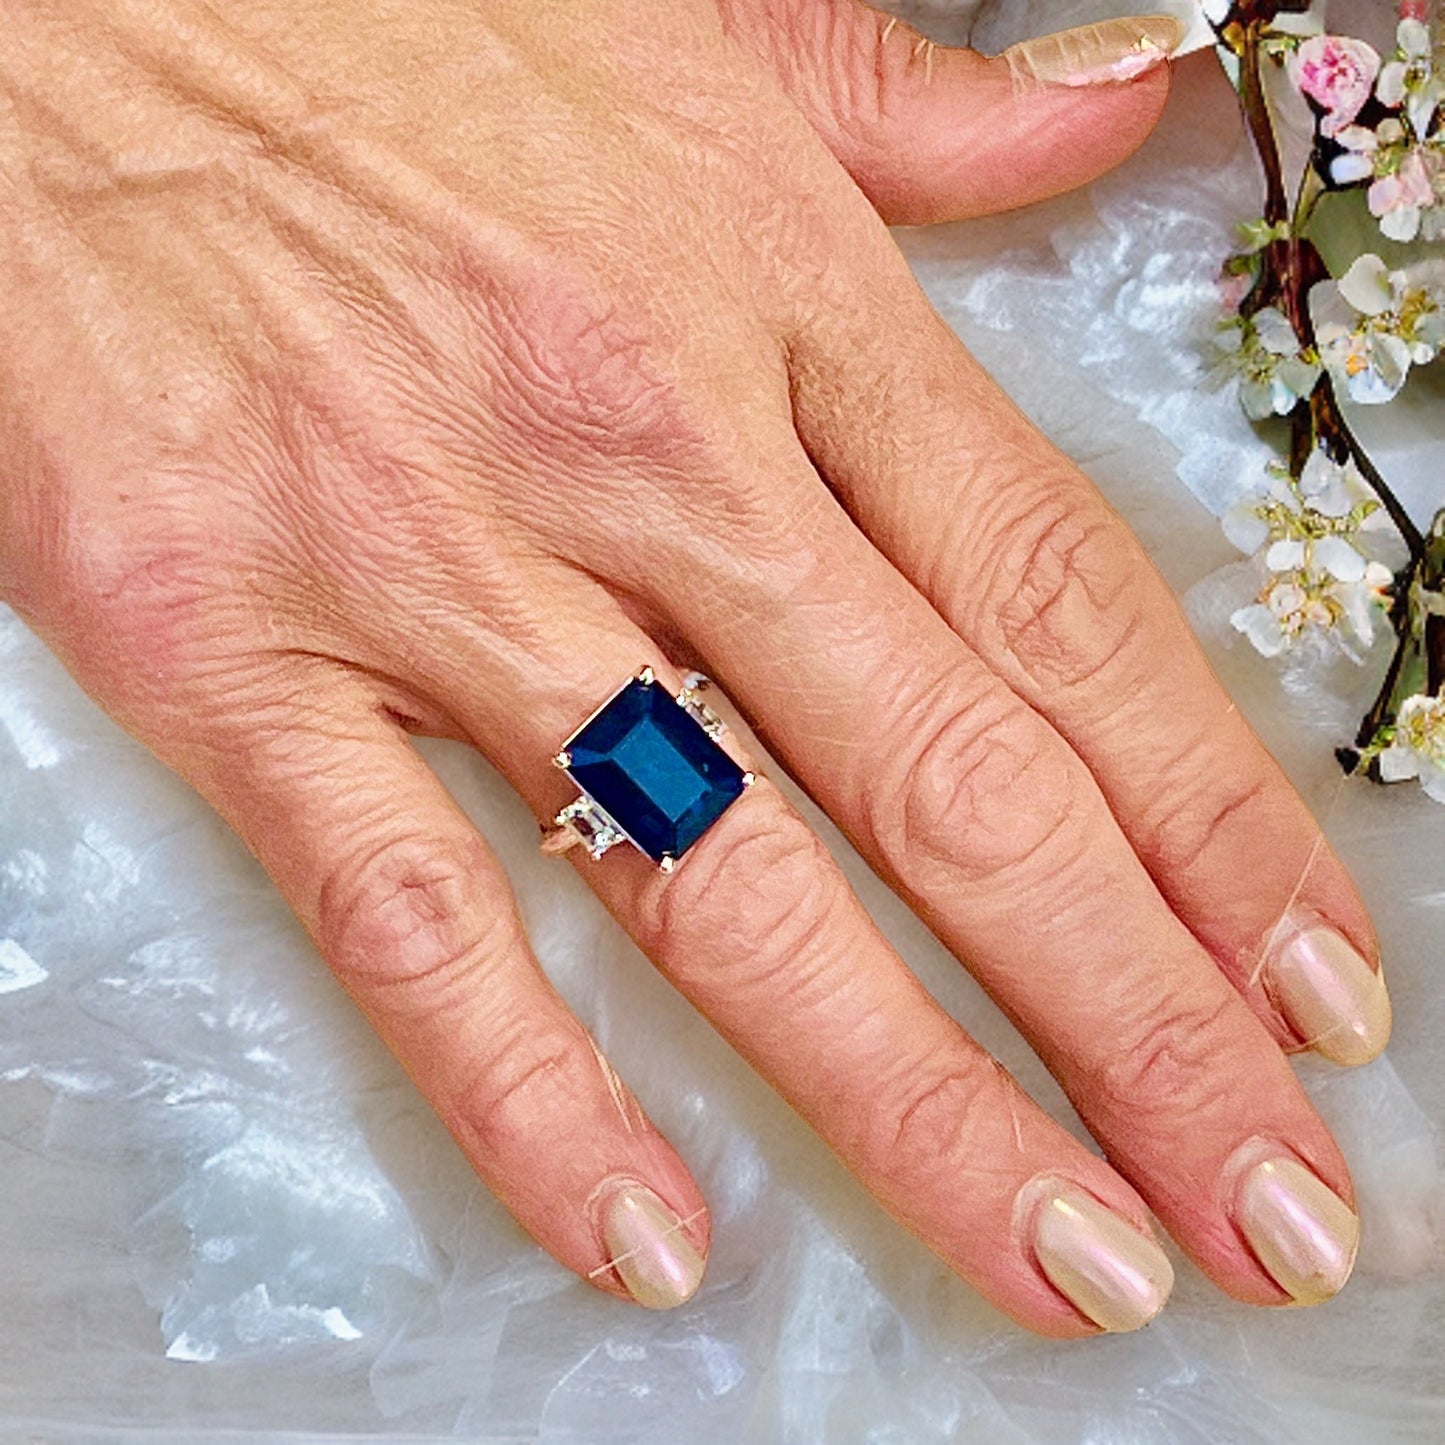 Natural Sapphire Diamond Ring Size 7 14k W Gold 12.36 TCW Certified $3,475 219222 - Certified Fine Jewelry